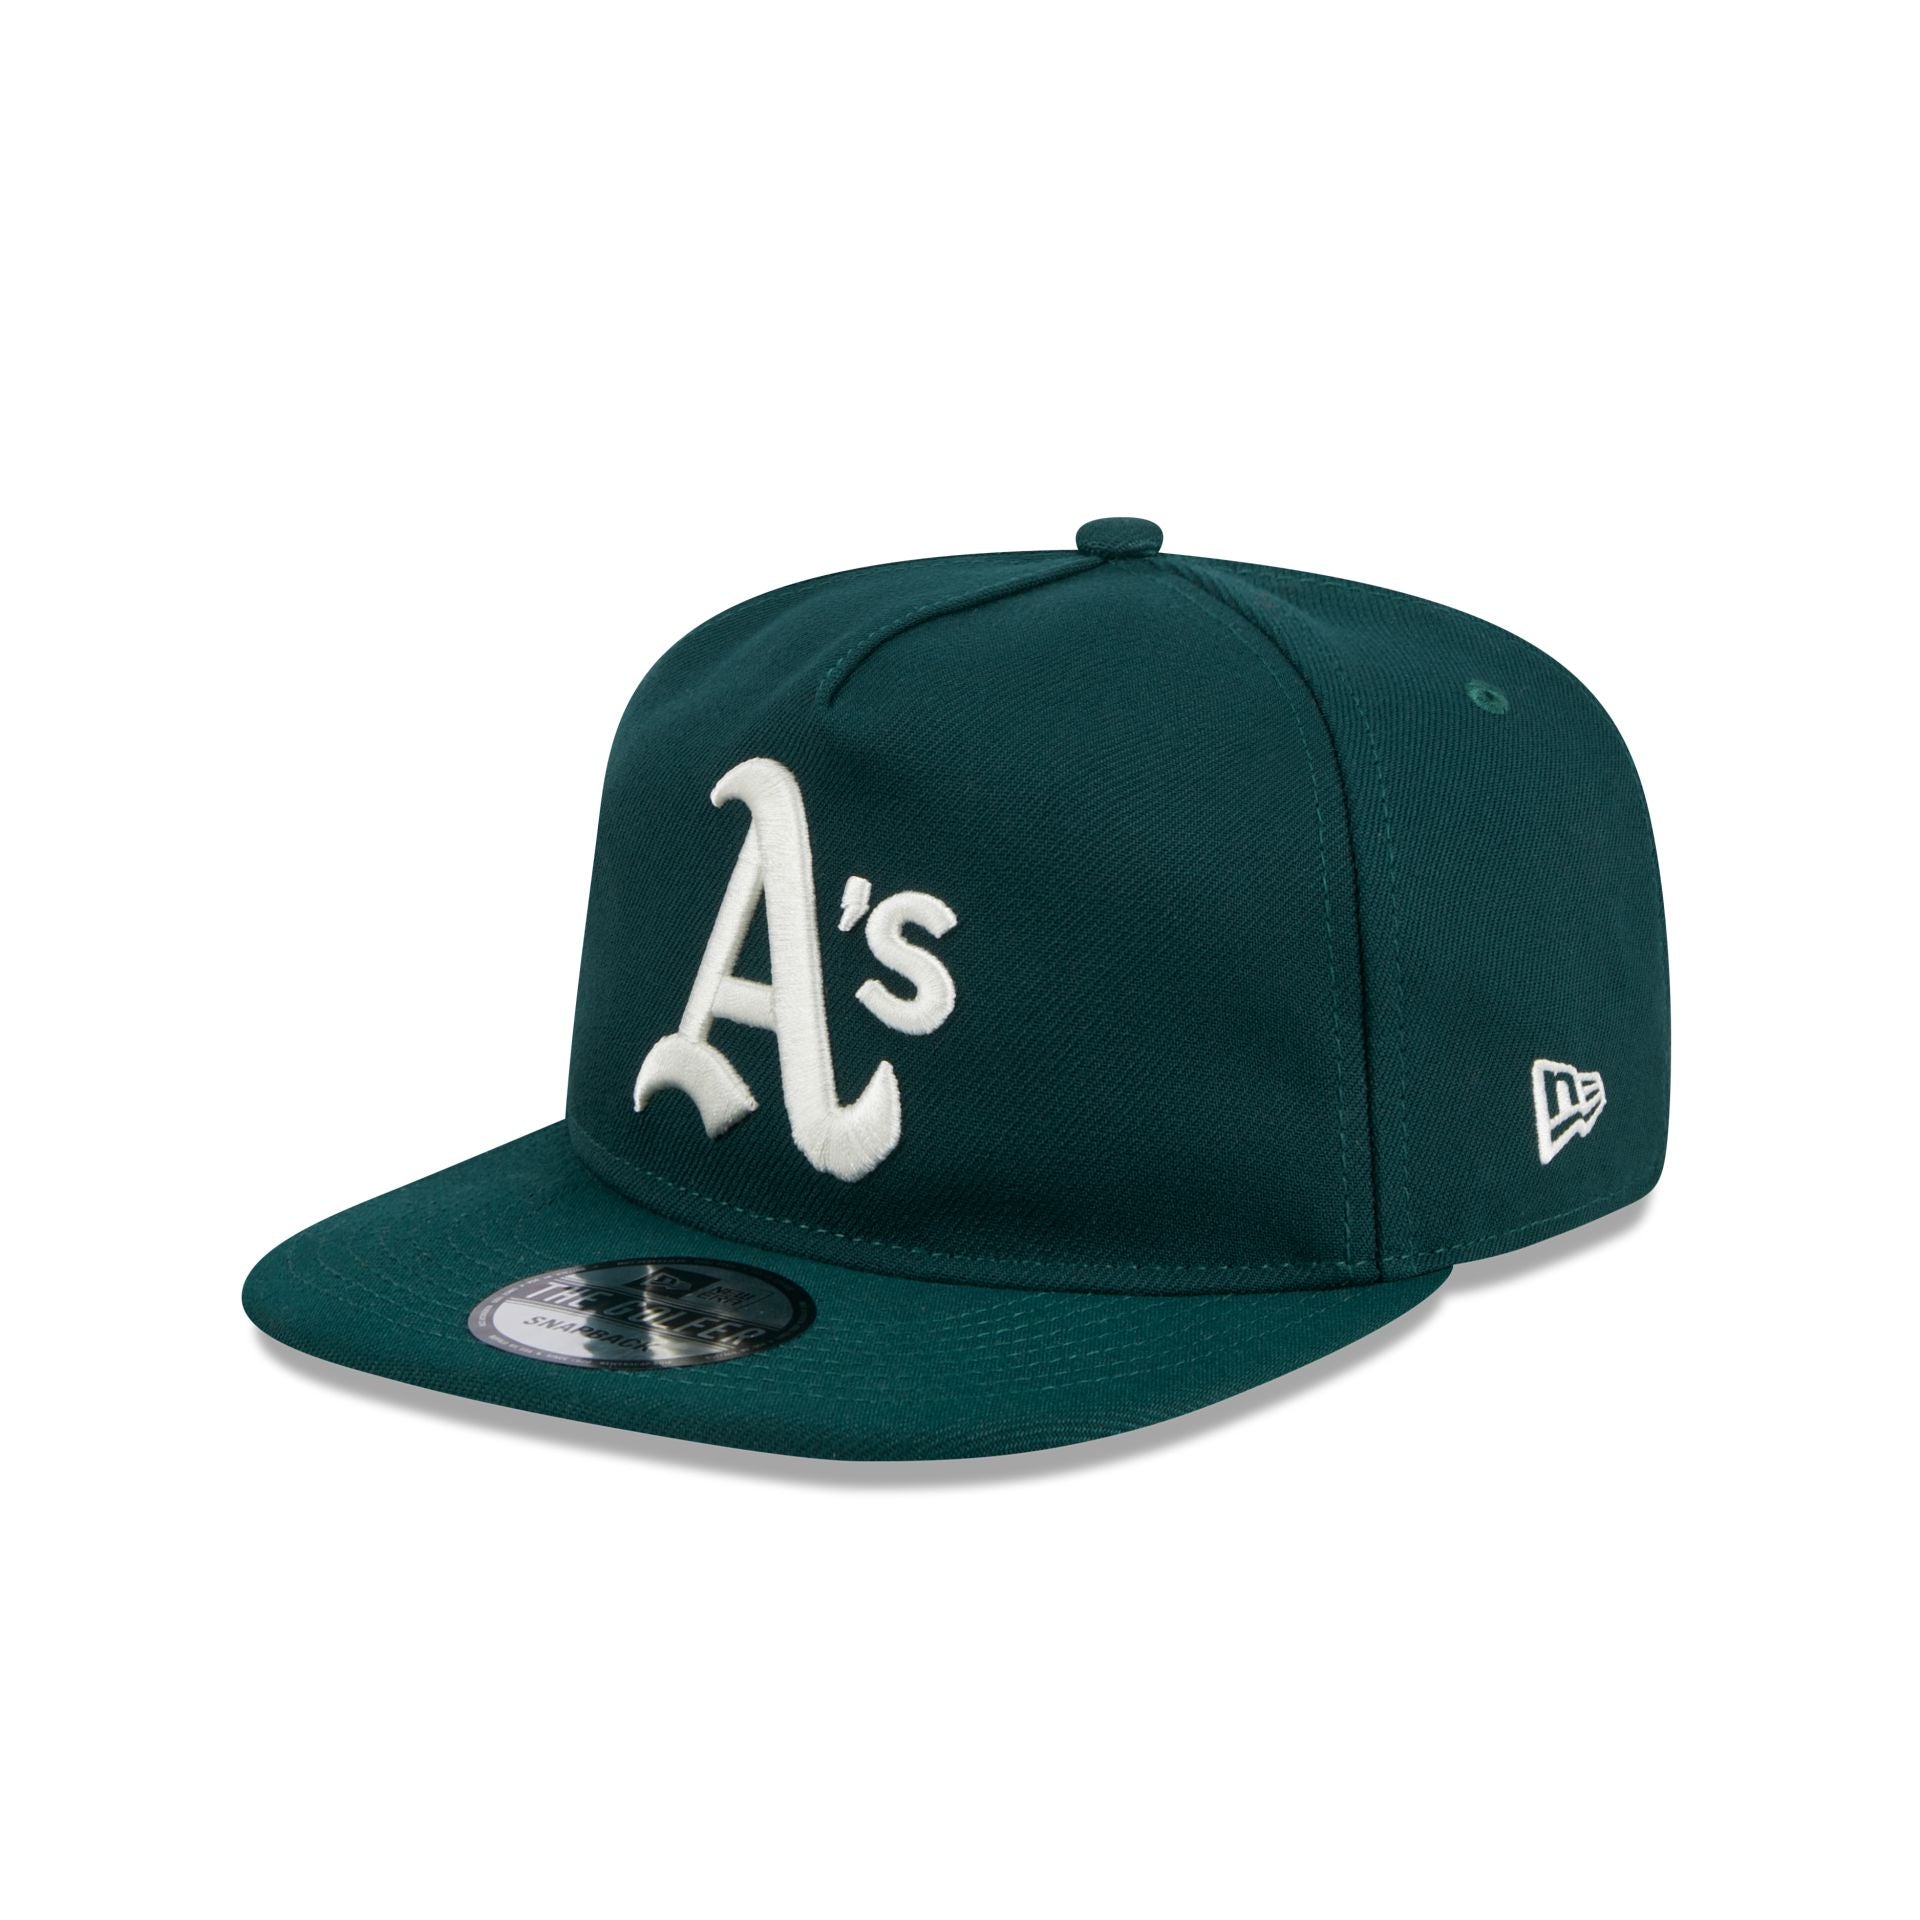 Oakland Athletics Golfer Hat, Green, MLB by New Era